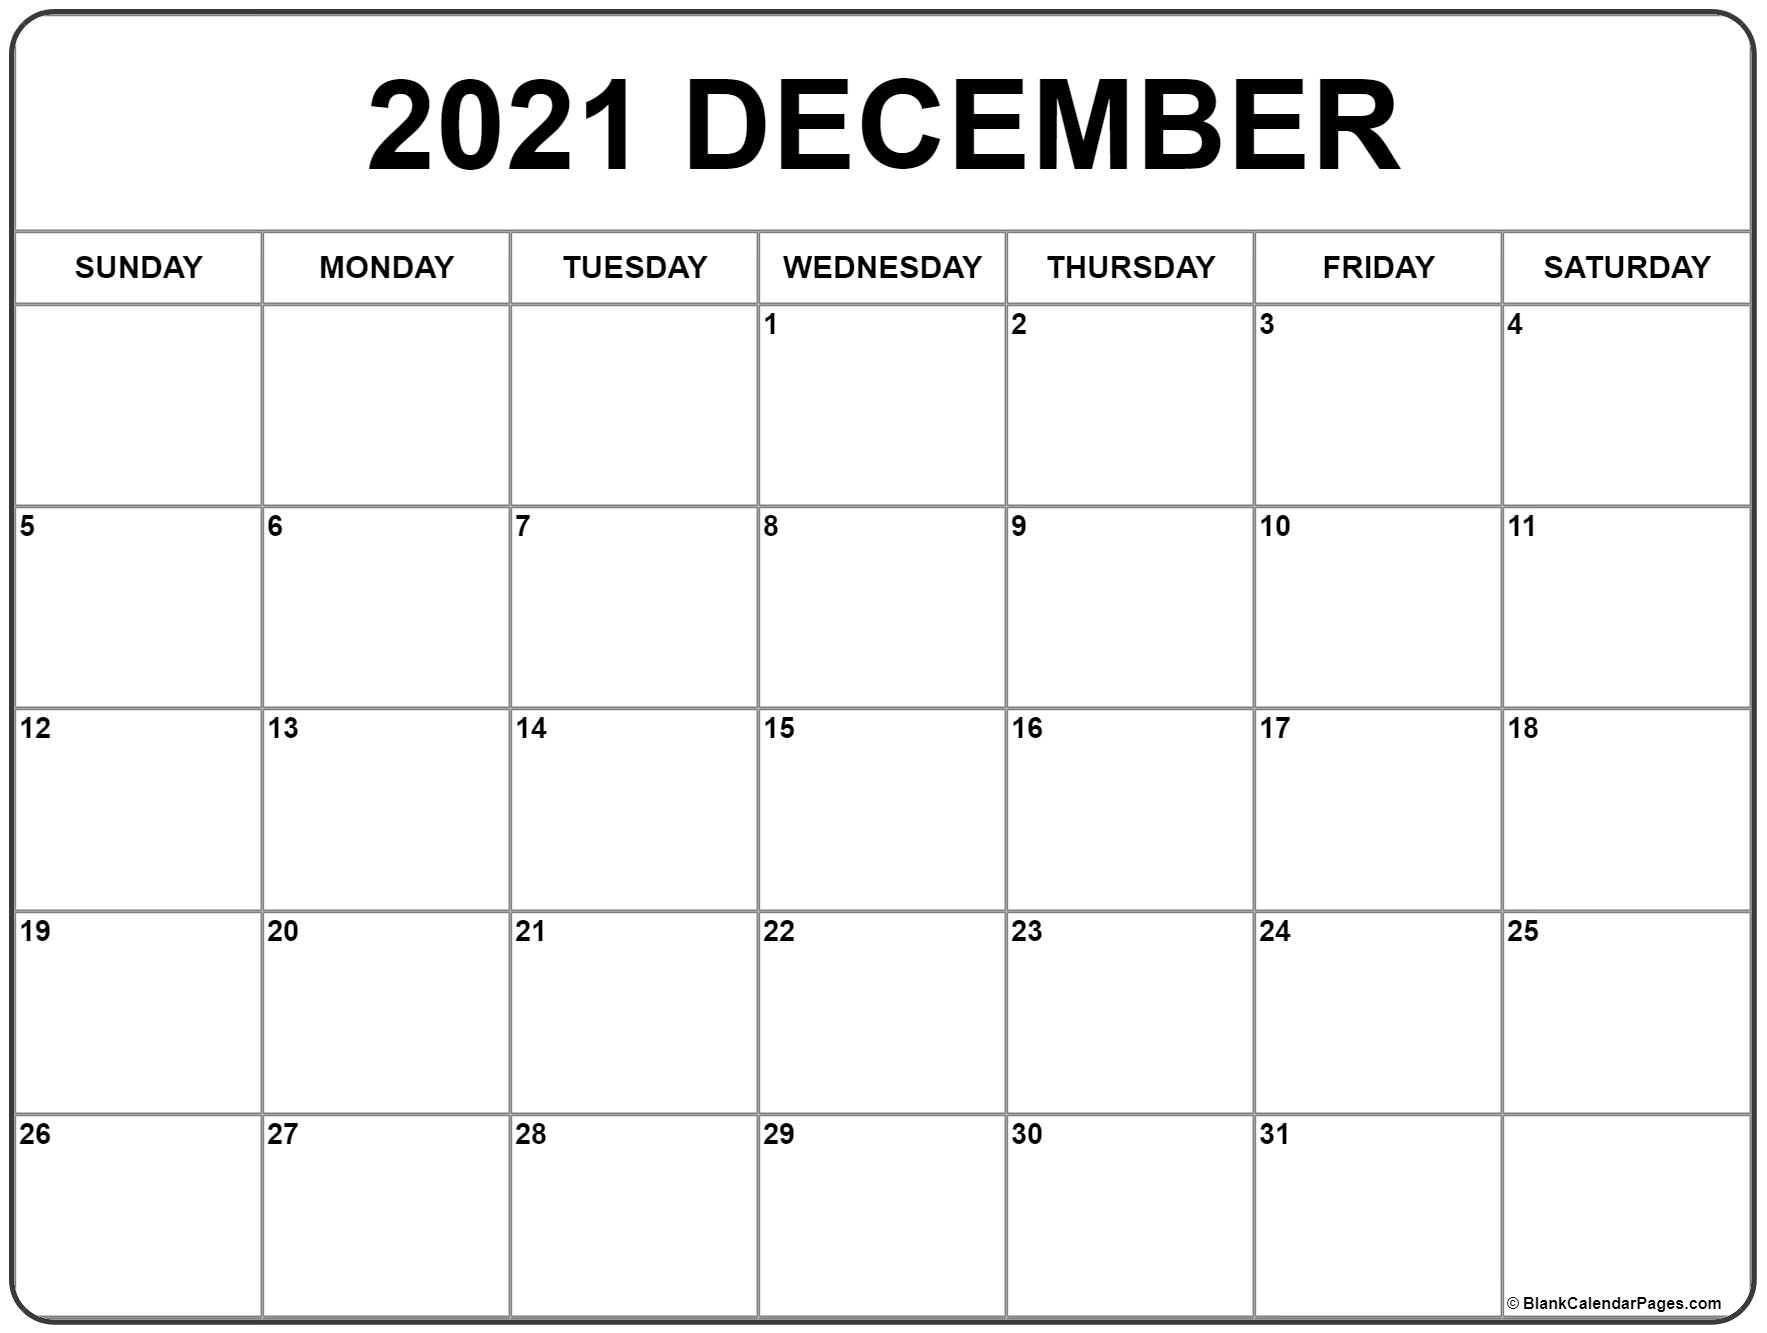 December 2021 Calendar | Free Printable Monthly Calendars